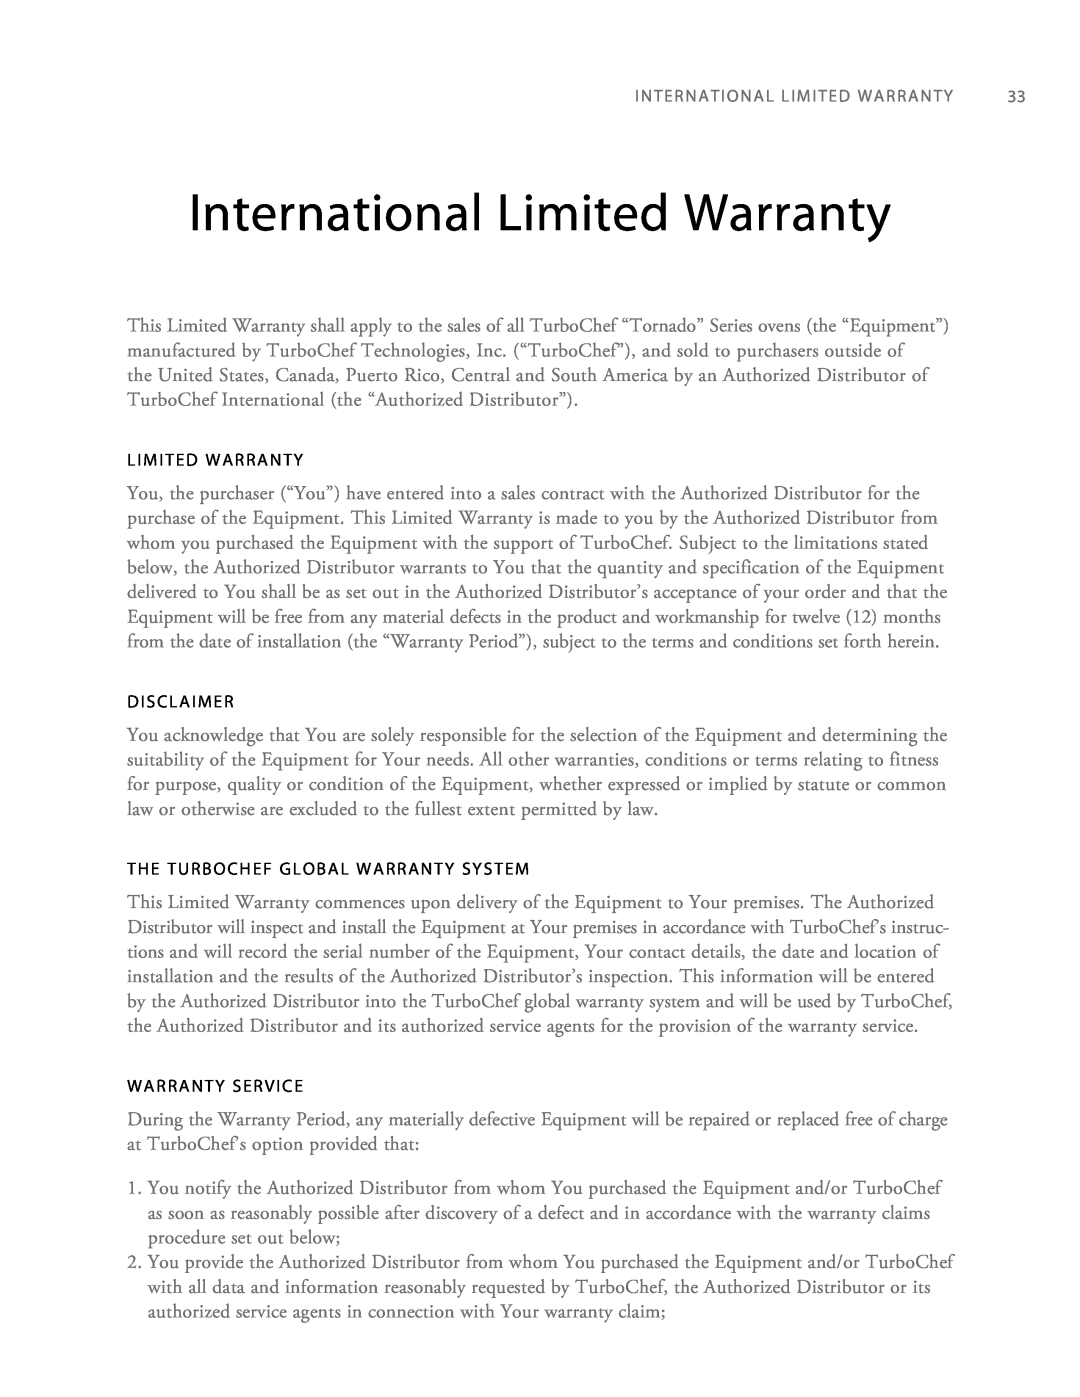 Turbo Chef Technologies Tornado 2 International Limited Warranty, L i m i ted Warranty, Disclaimer, Warranty Service 